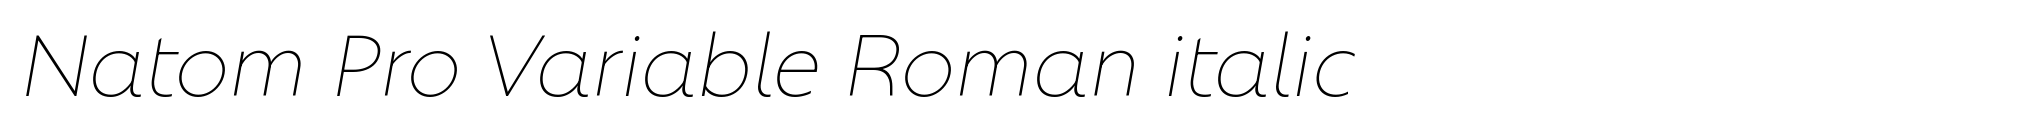 Natom Pro Variable Roman italic image